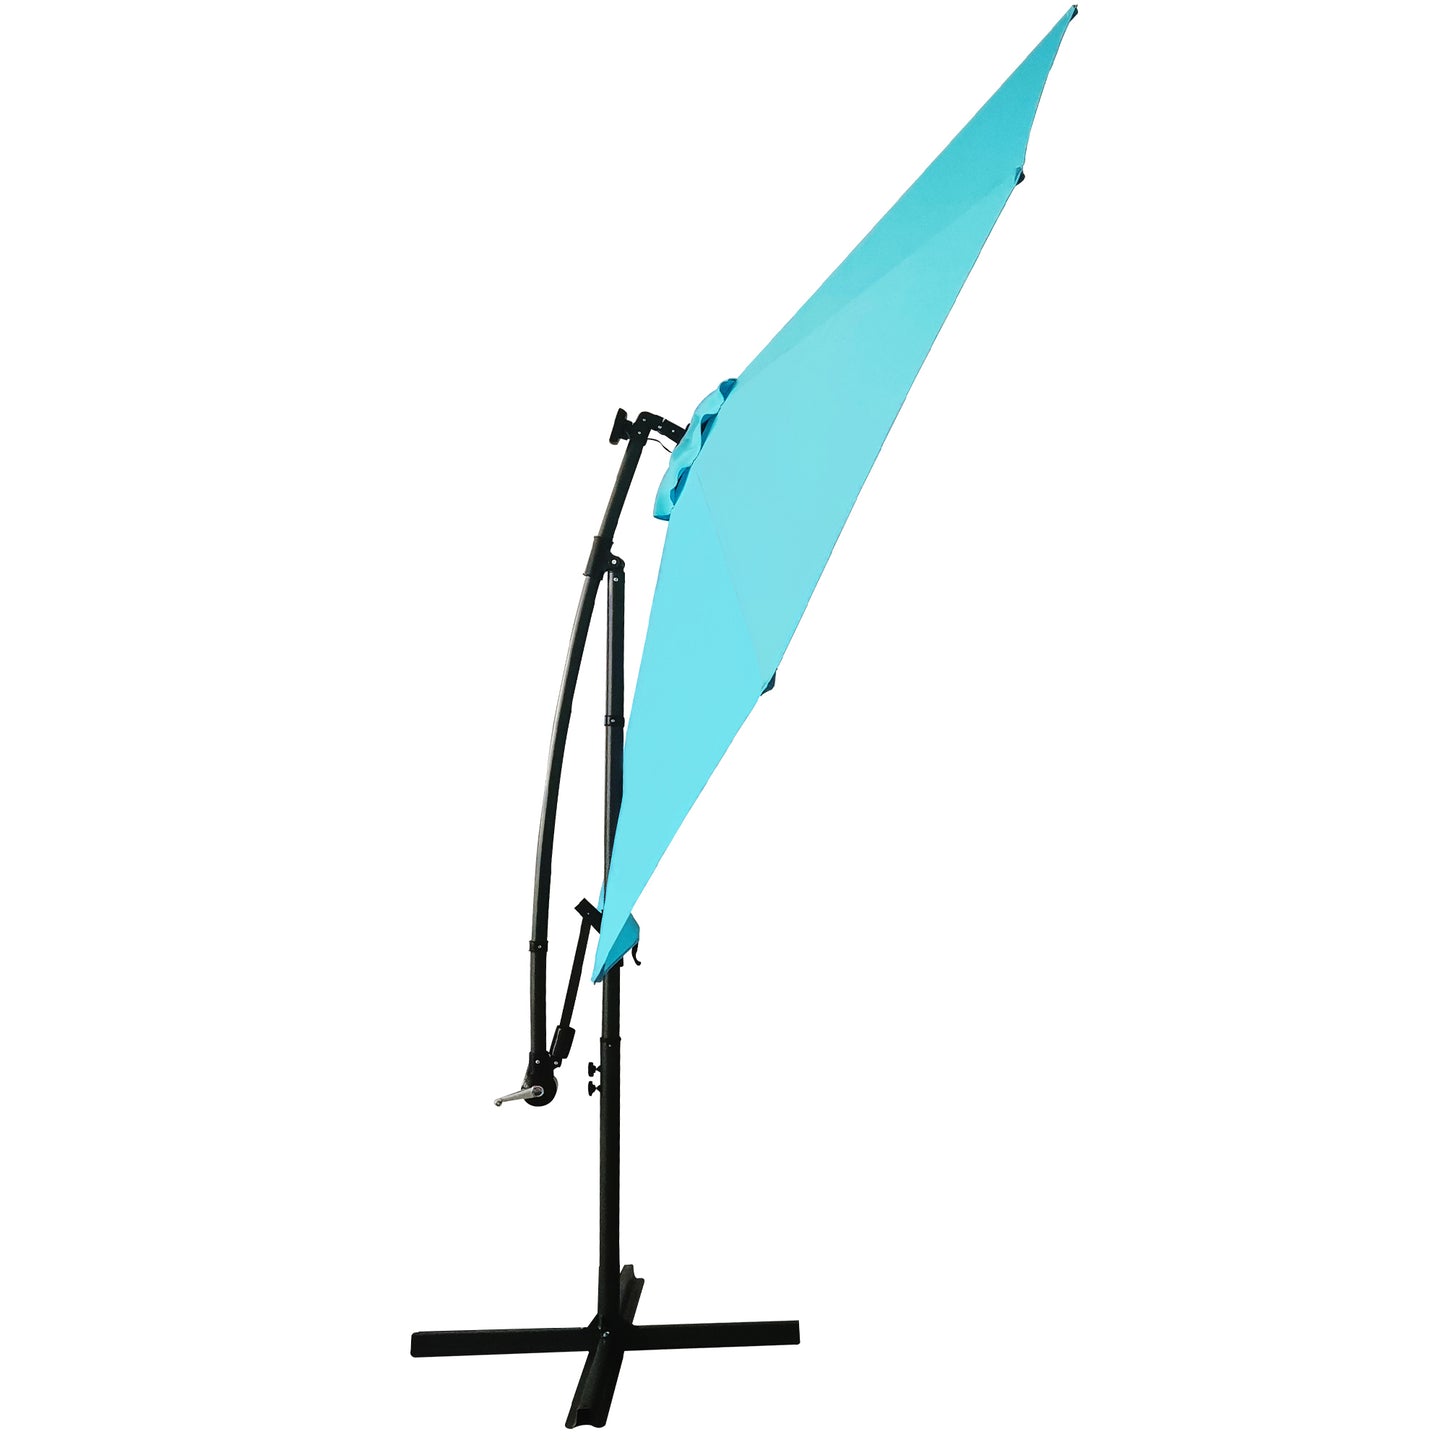 Outdoor 10ft Cantilever Umbrella, SYNGAR Patio Offset Hanging Market Umbrella w/ 24 LED Lights, 8 Steel Ribs, Cross Base, Crank & Tilt Control, Patio Solar Umbrella for Garden, Pool, Yard, C07